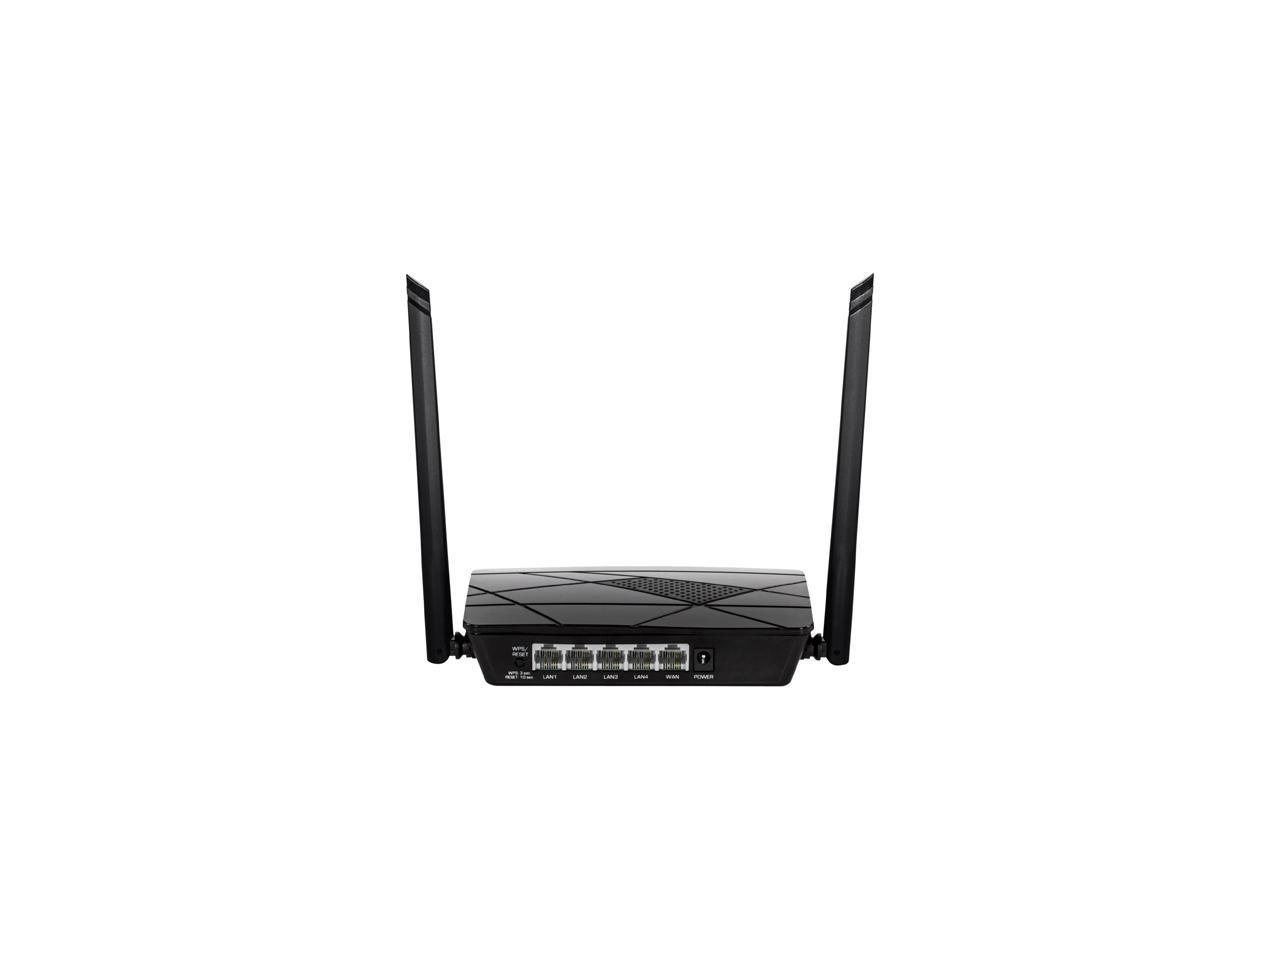 TRENDnet TEW-731BR N300 Wireless Home Router - Newegg.com